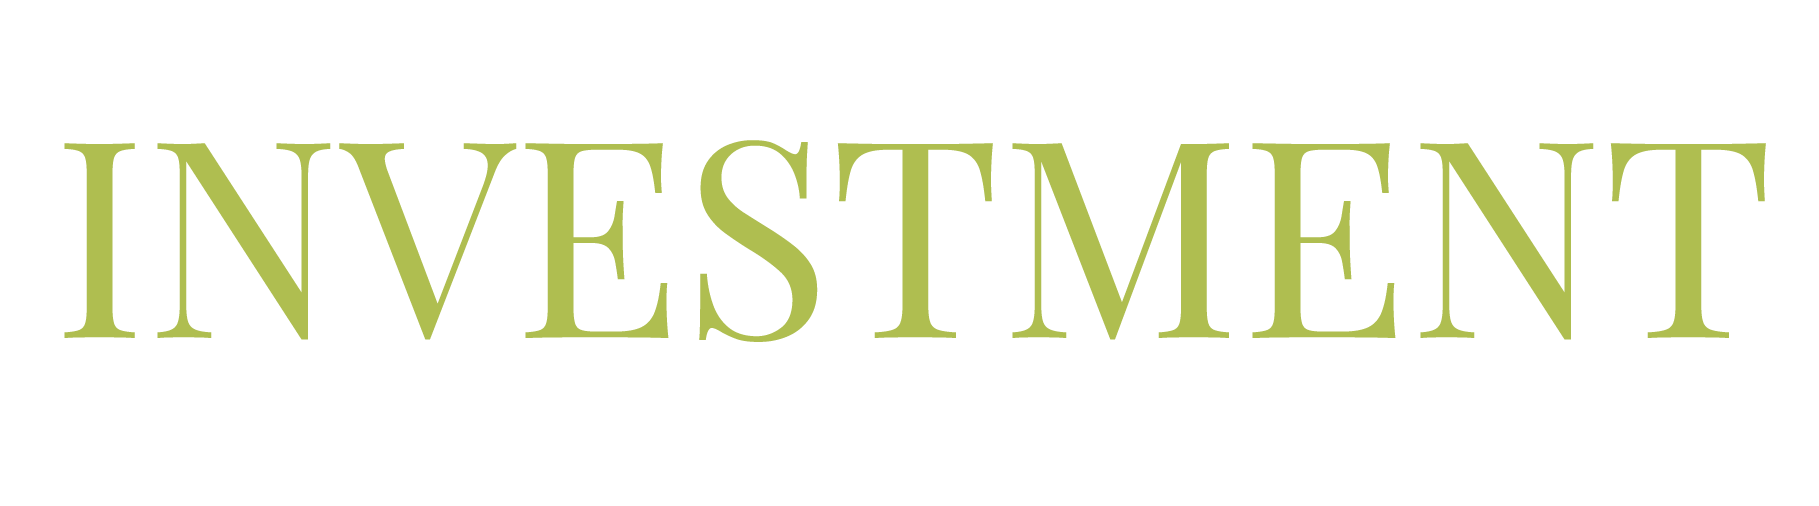 investmetn-sales-graphic